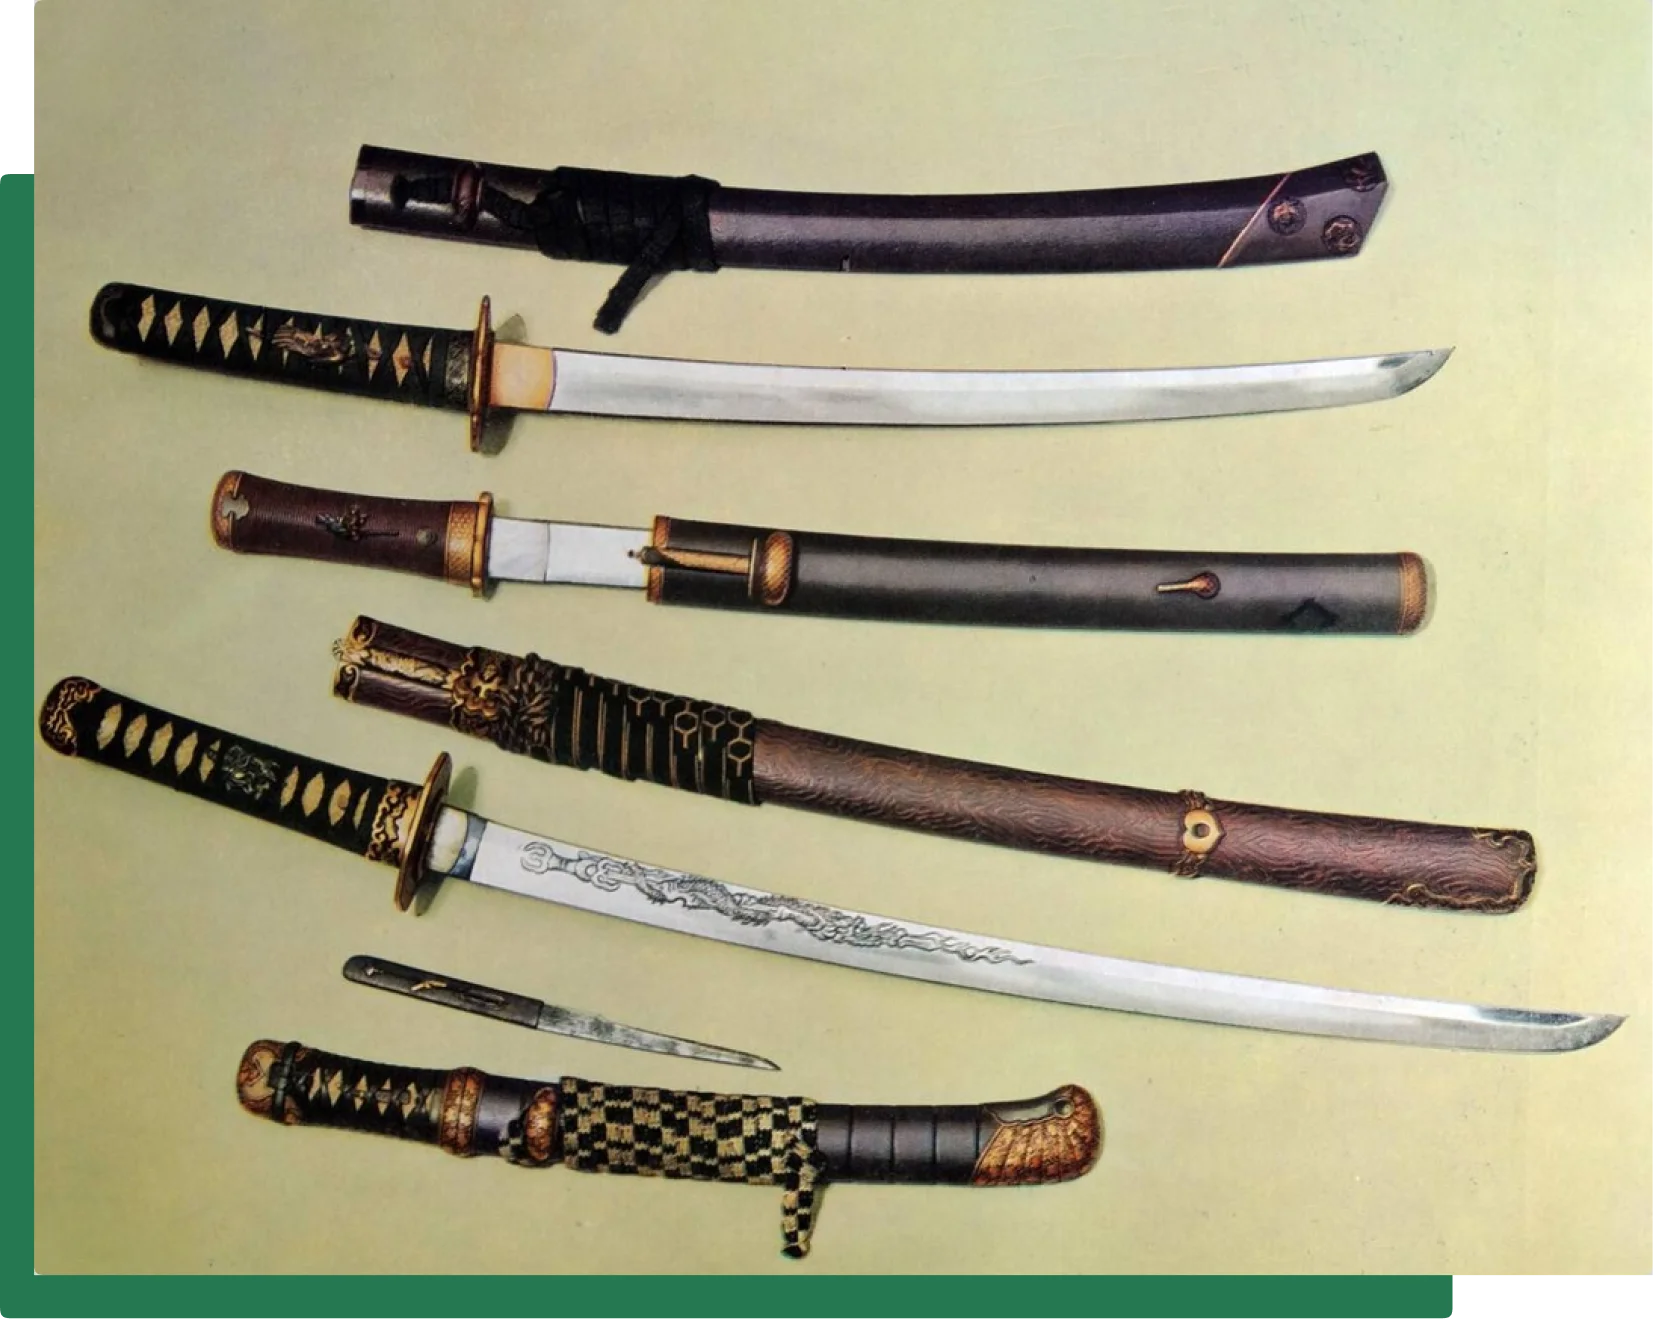 Japanese Swords